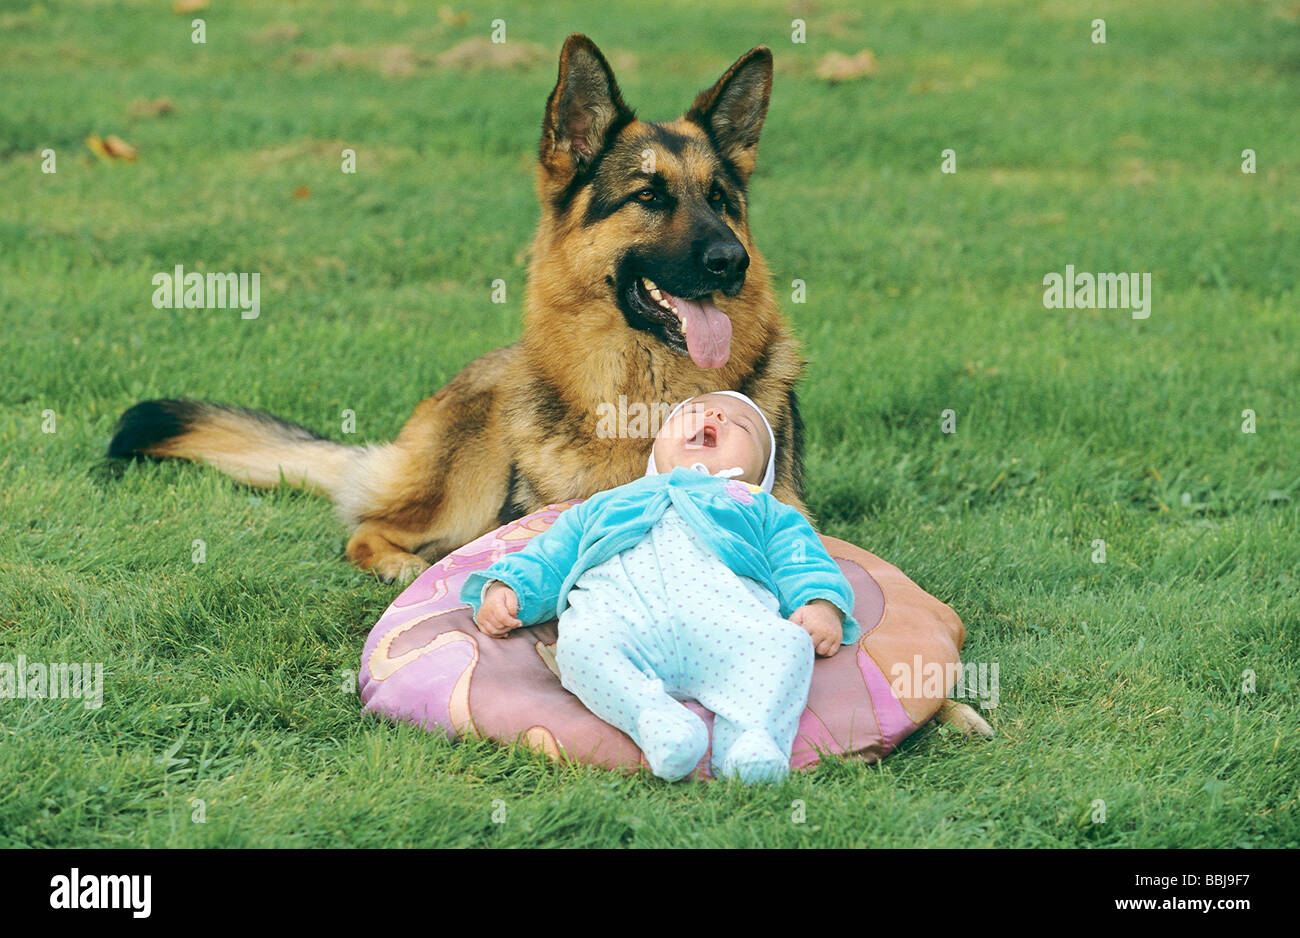 german shepherd good with babies